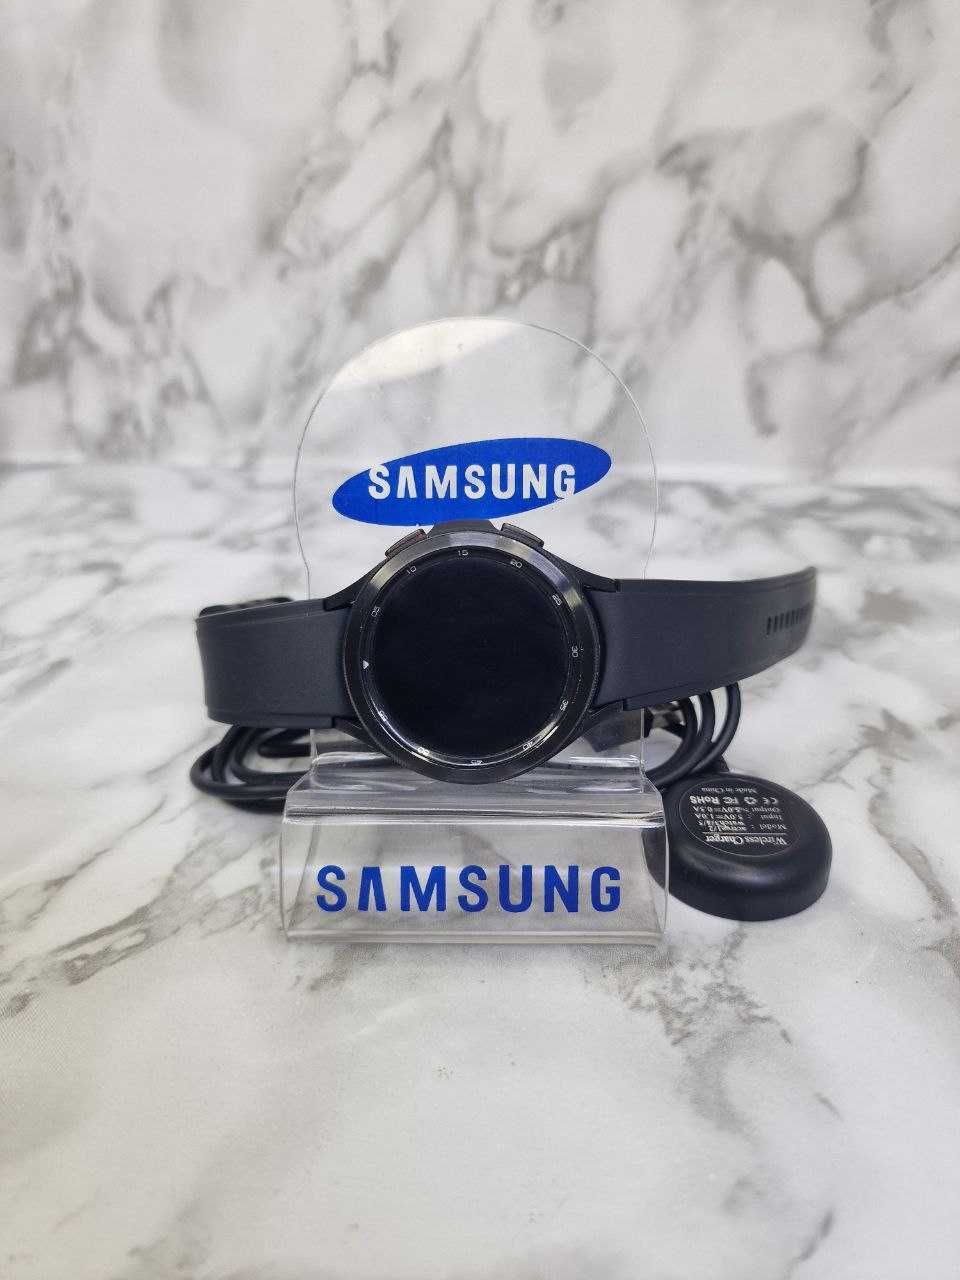 РАССРОЧКА ДО 60 МЕСЯЦЕВ! Samsung Watch 4 46mm "Ломбард Лидер"